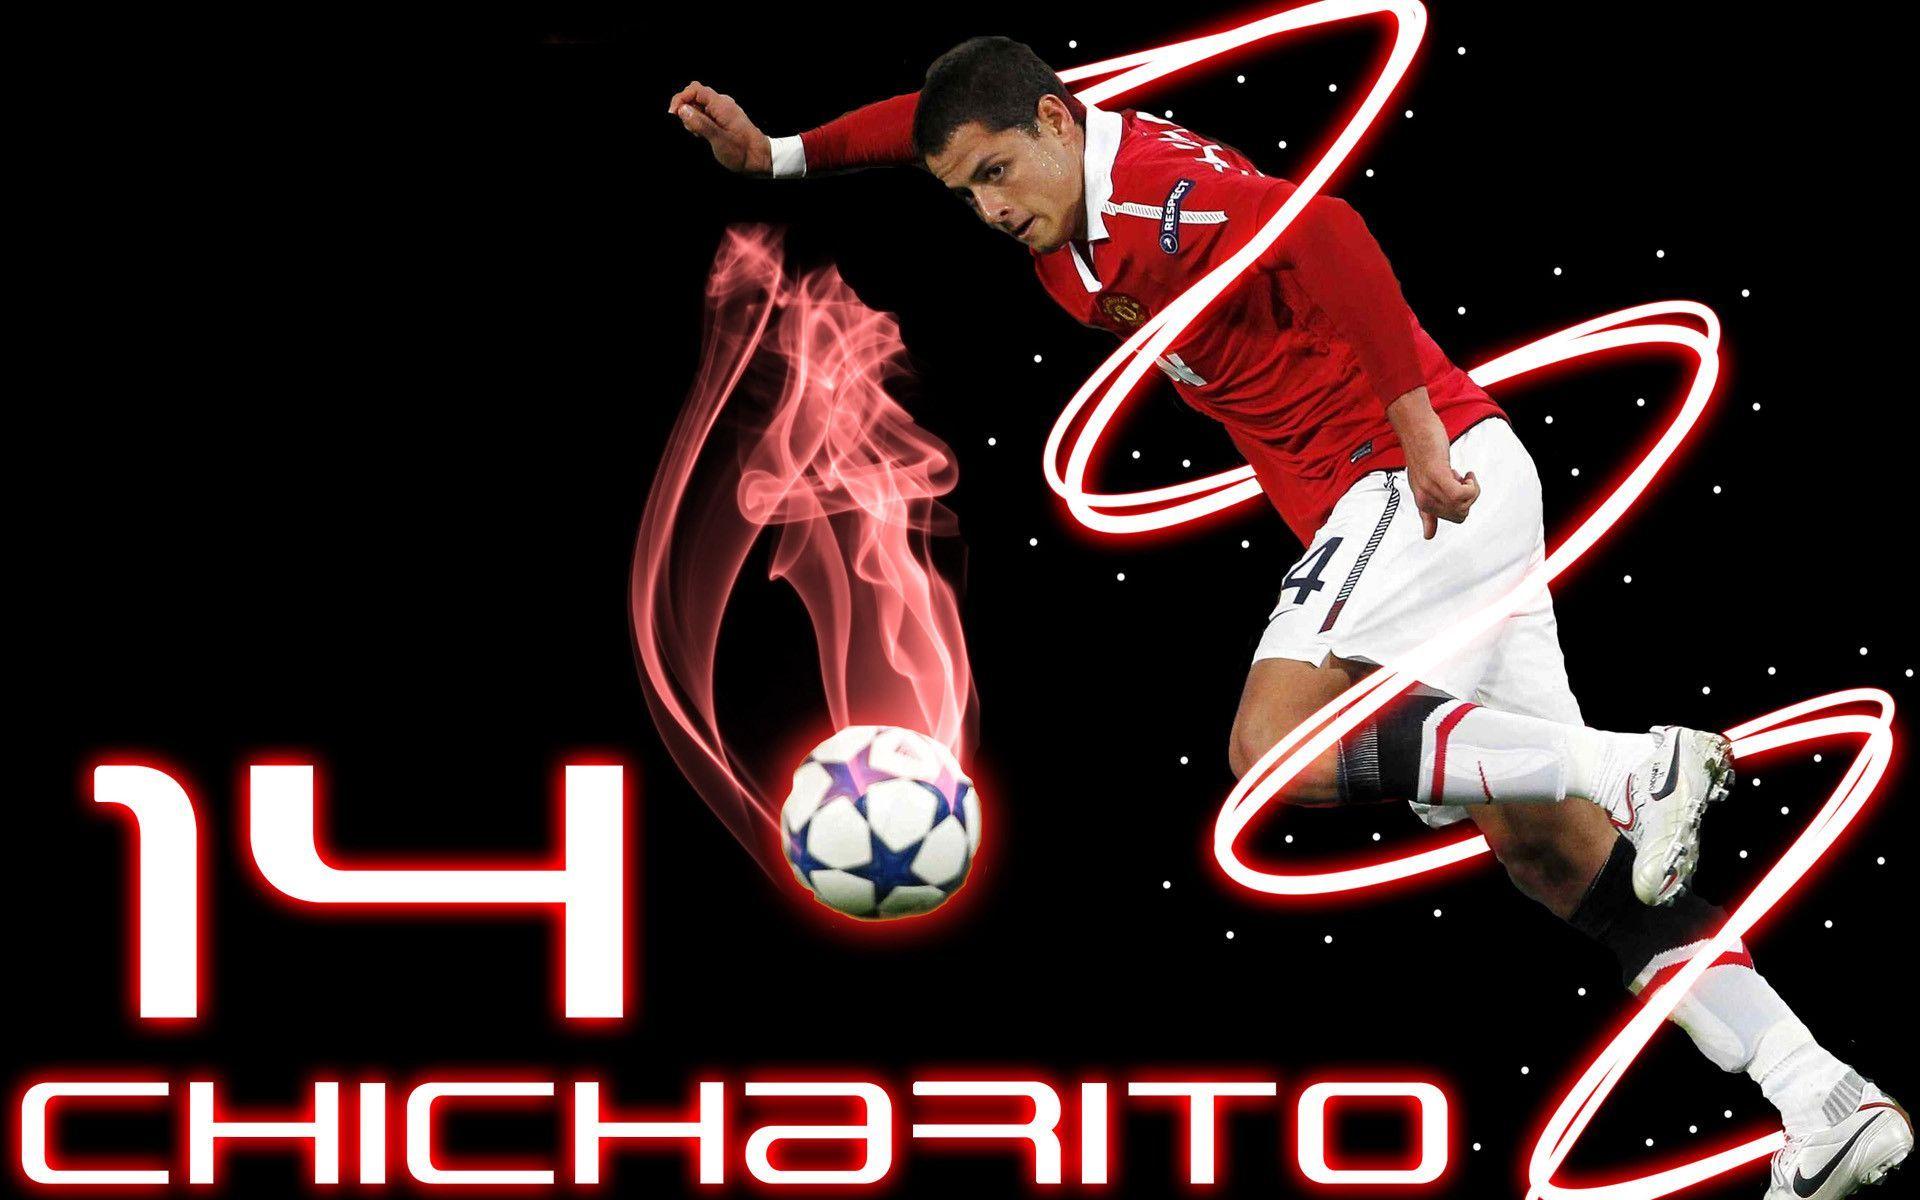 Chicharito Hernandez 37642 HD Wallpaper in Football